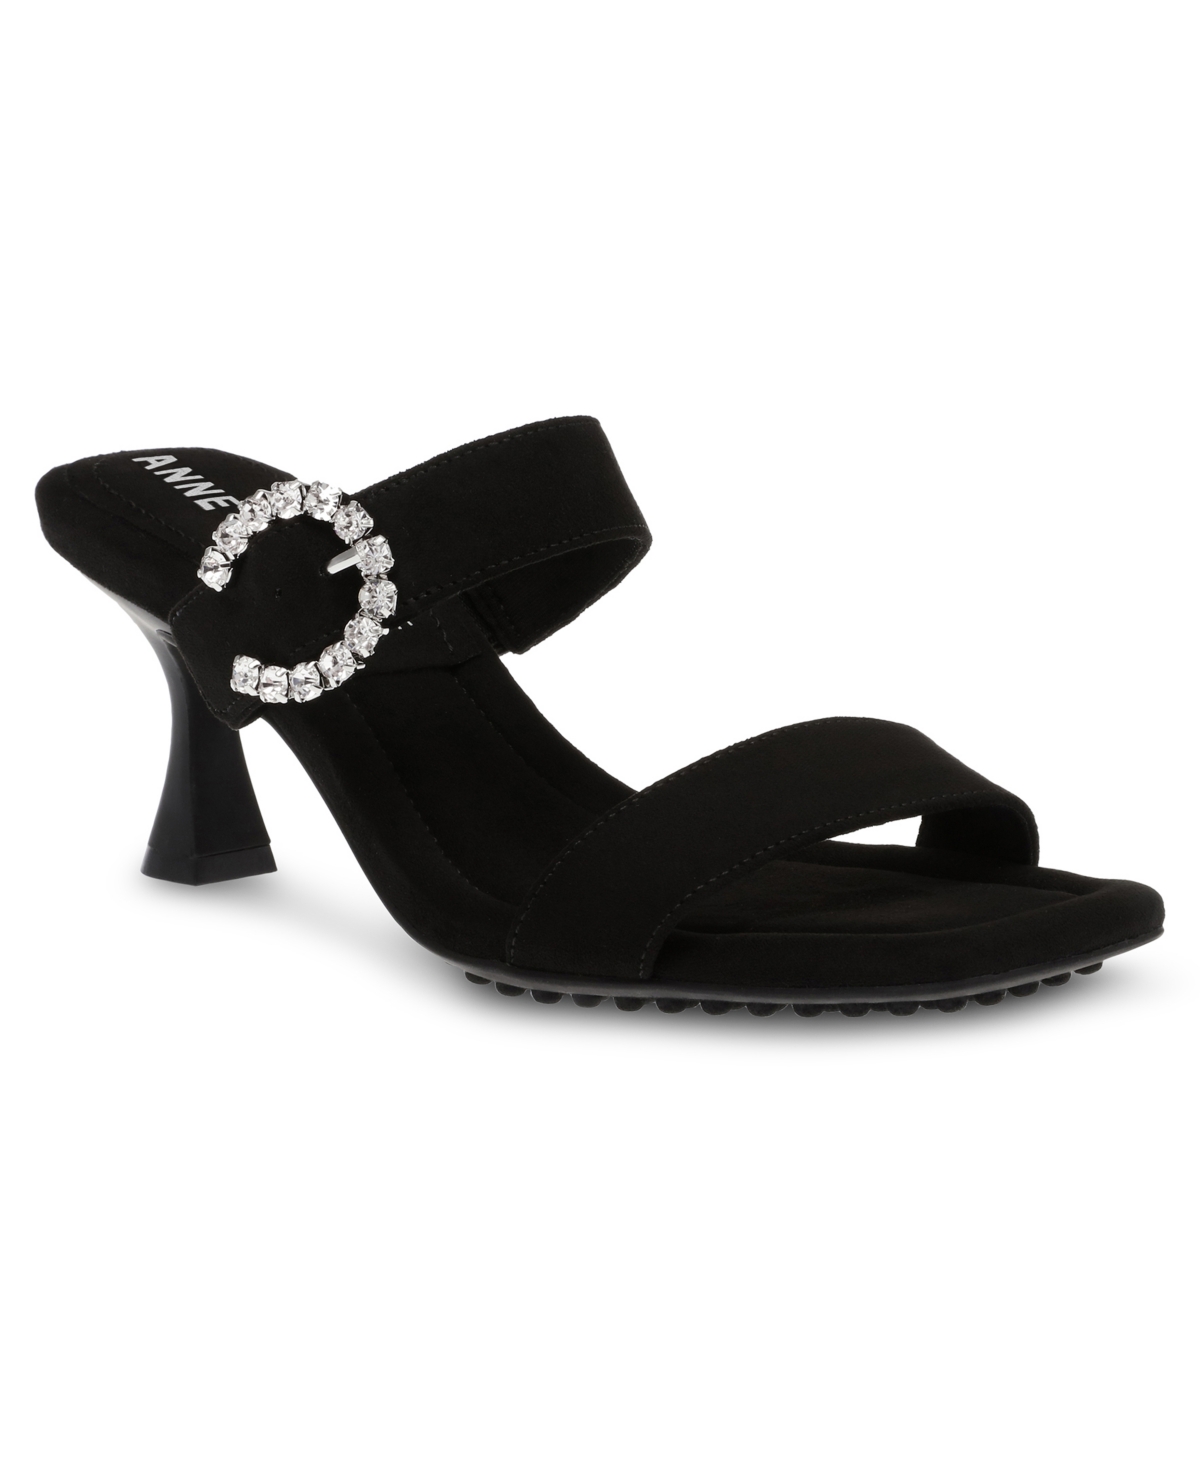 Women's Josie Square Toe Dress Sandals - Black Suede